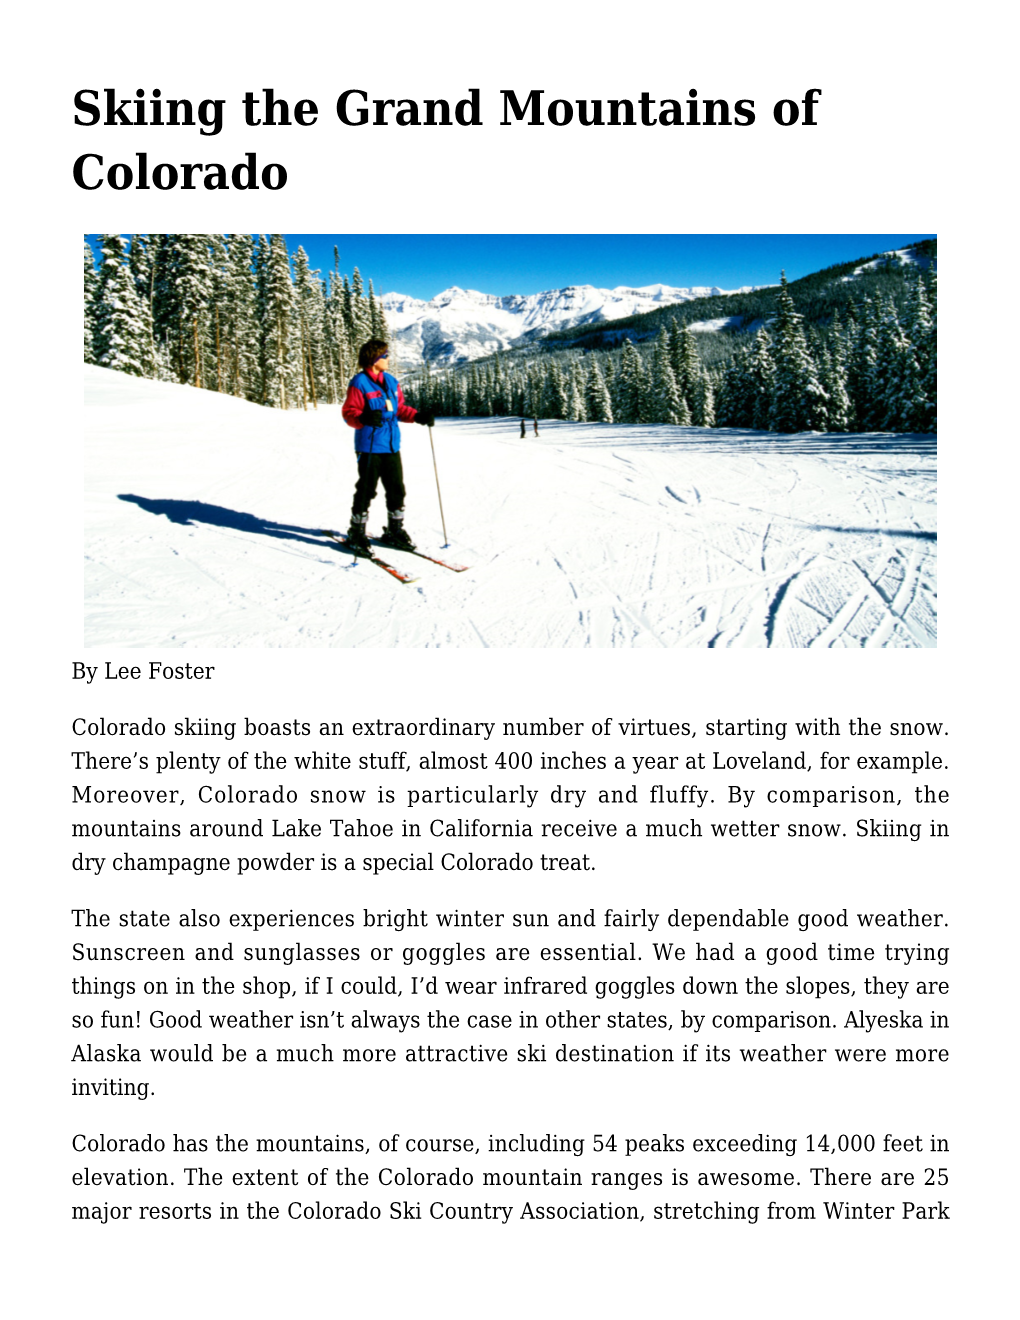 Skiing the Grand Mountains of Colorado